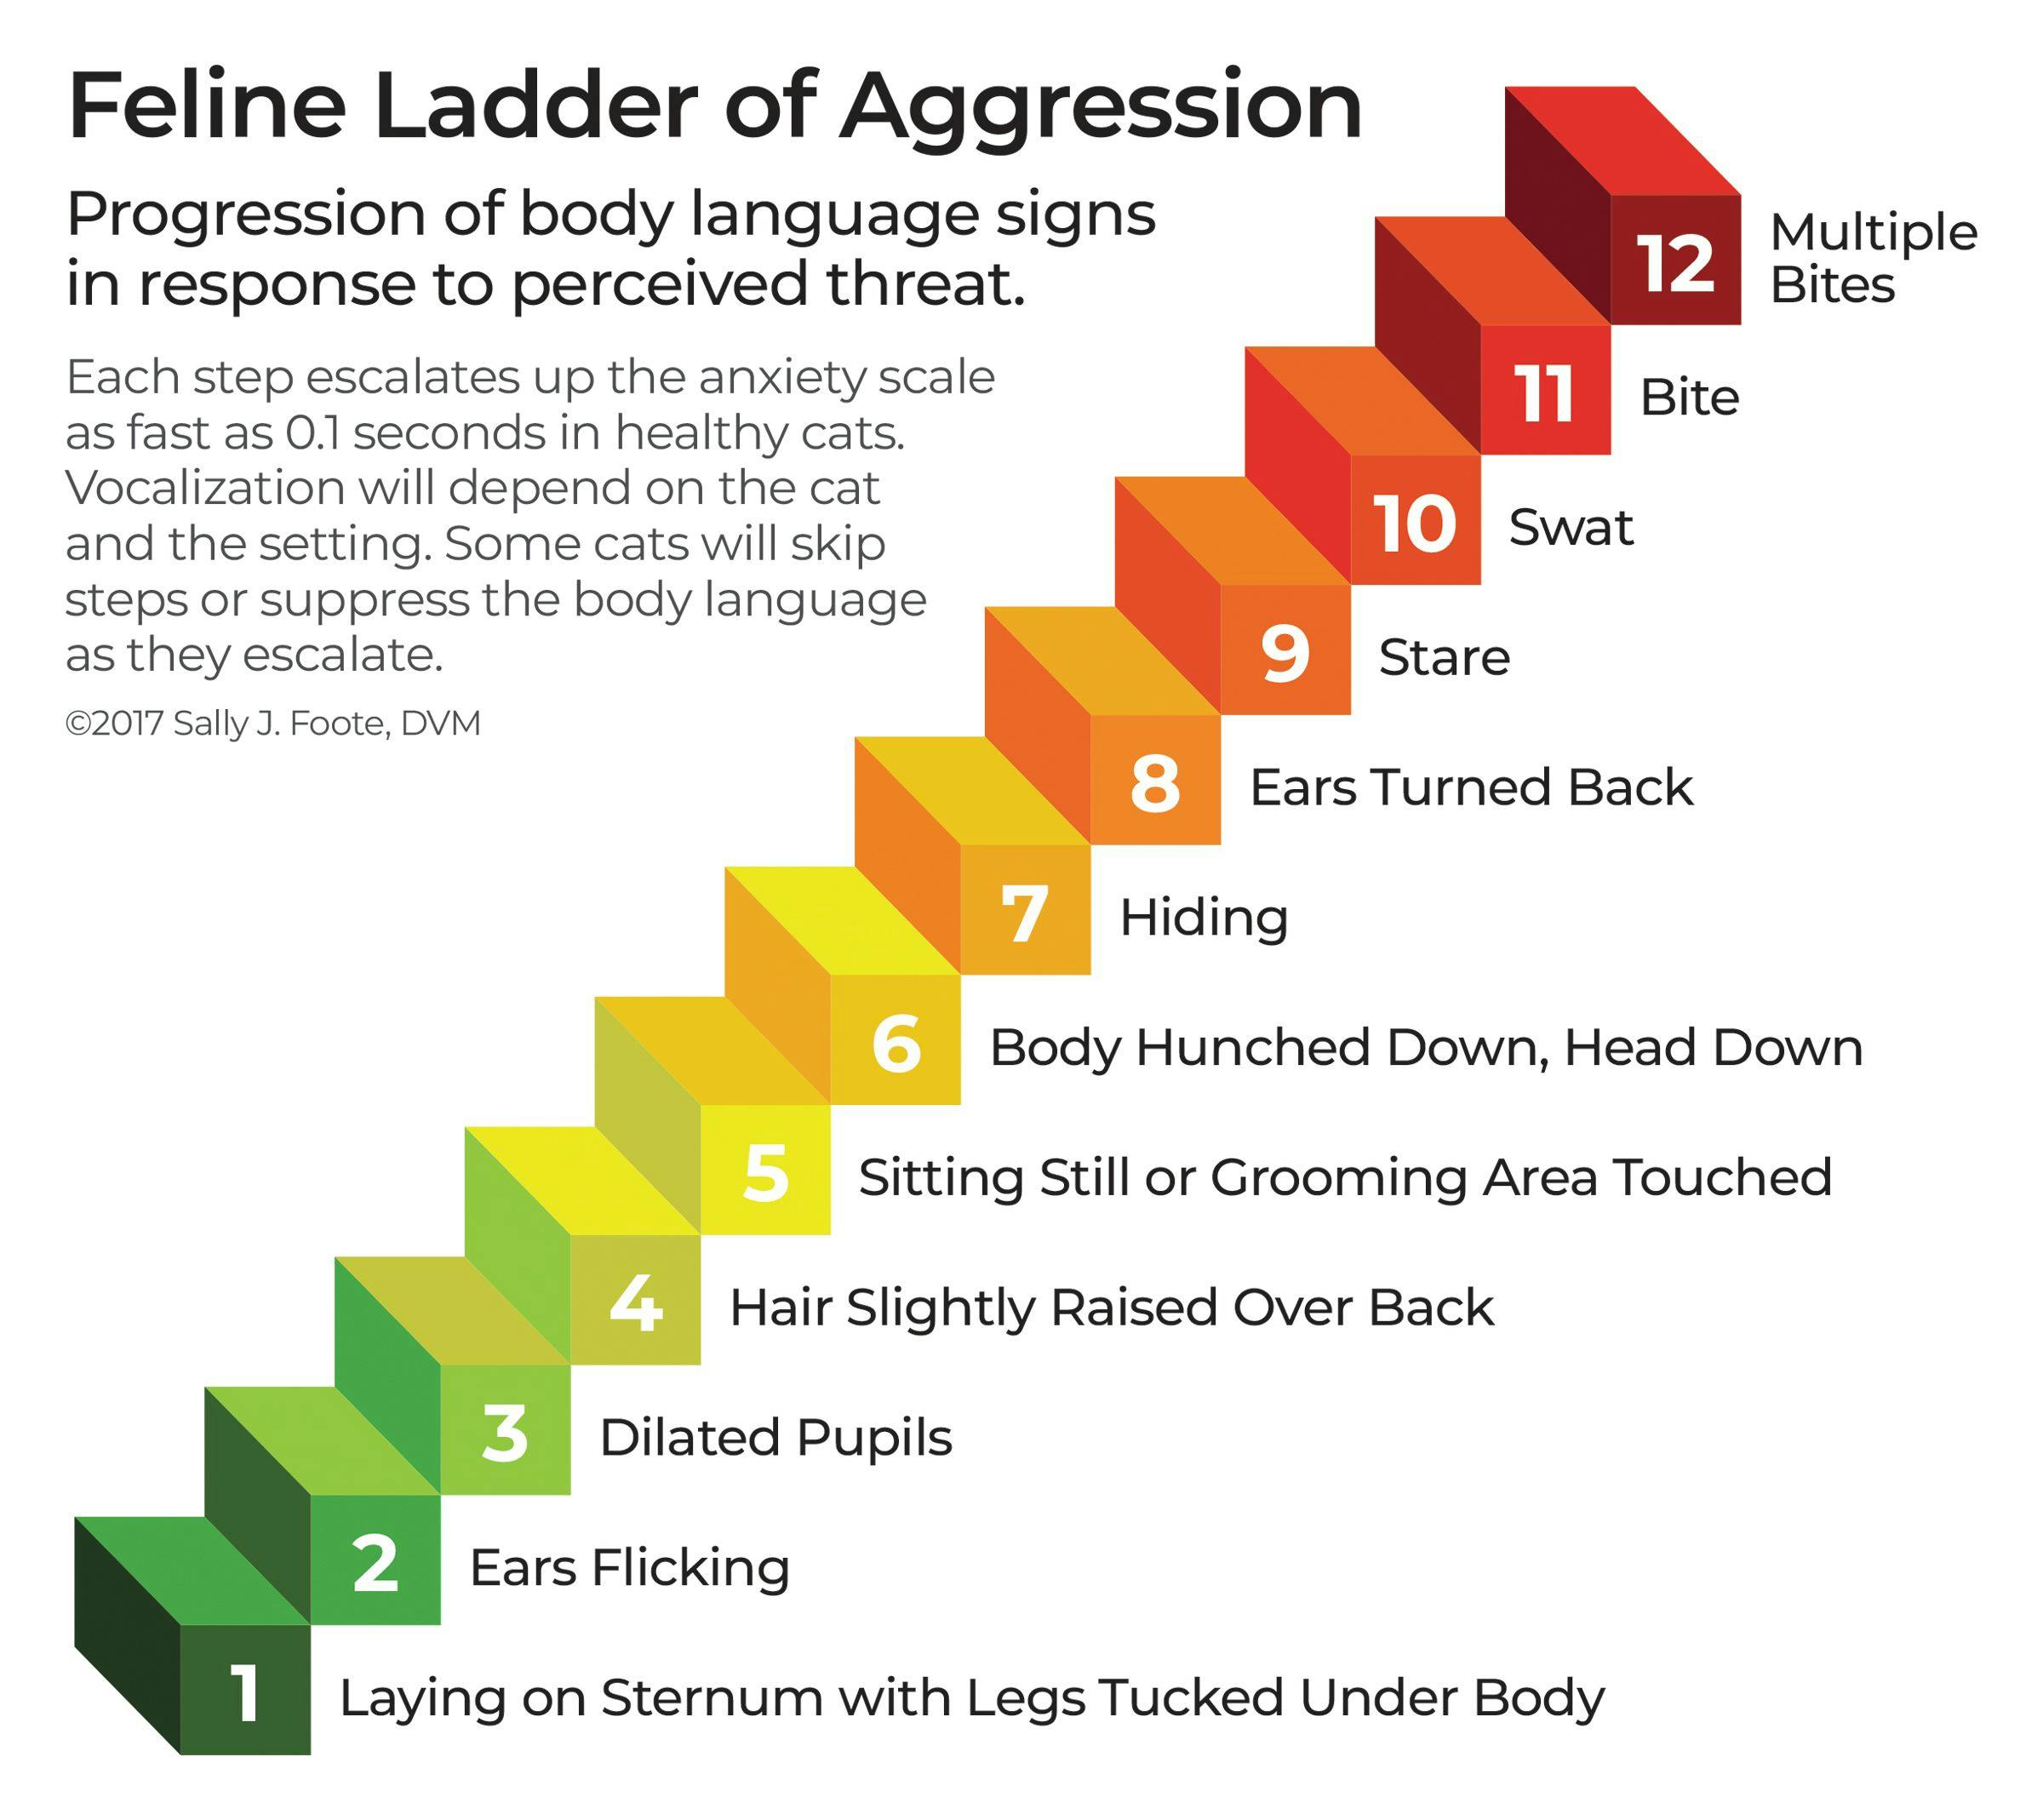 Figure 1: Behavior assessment tool: The Feline Ladder of Aggression walks caregivers through escalating signs of feline aggression. (Courtesy of Sally Foote, DVM, CABC-IAABC, LSHC-S, FFE)